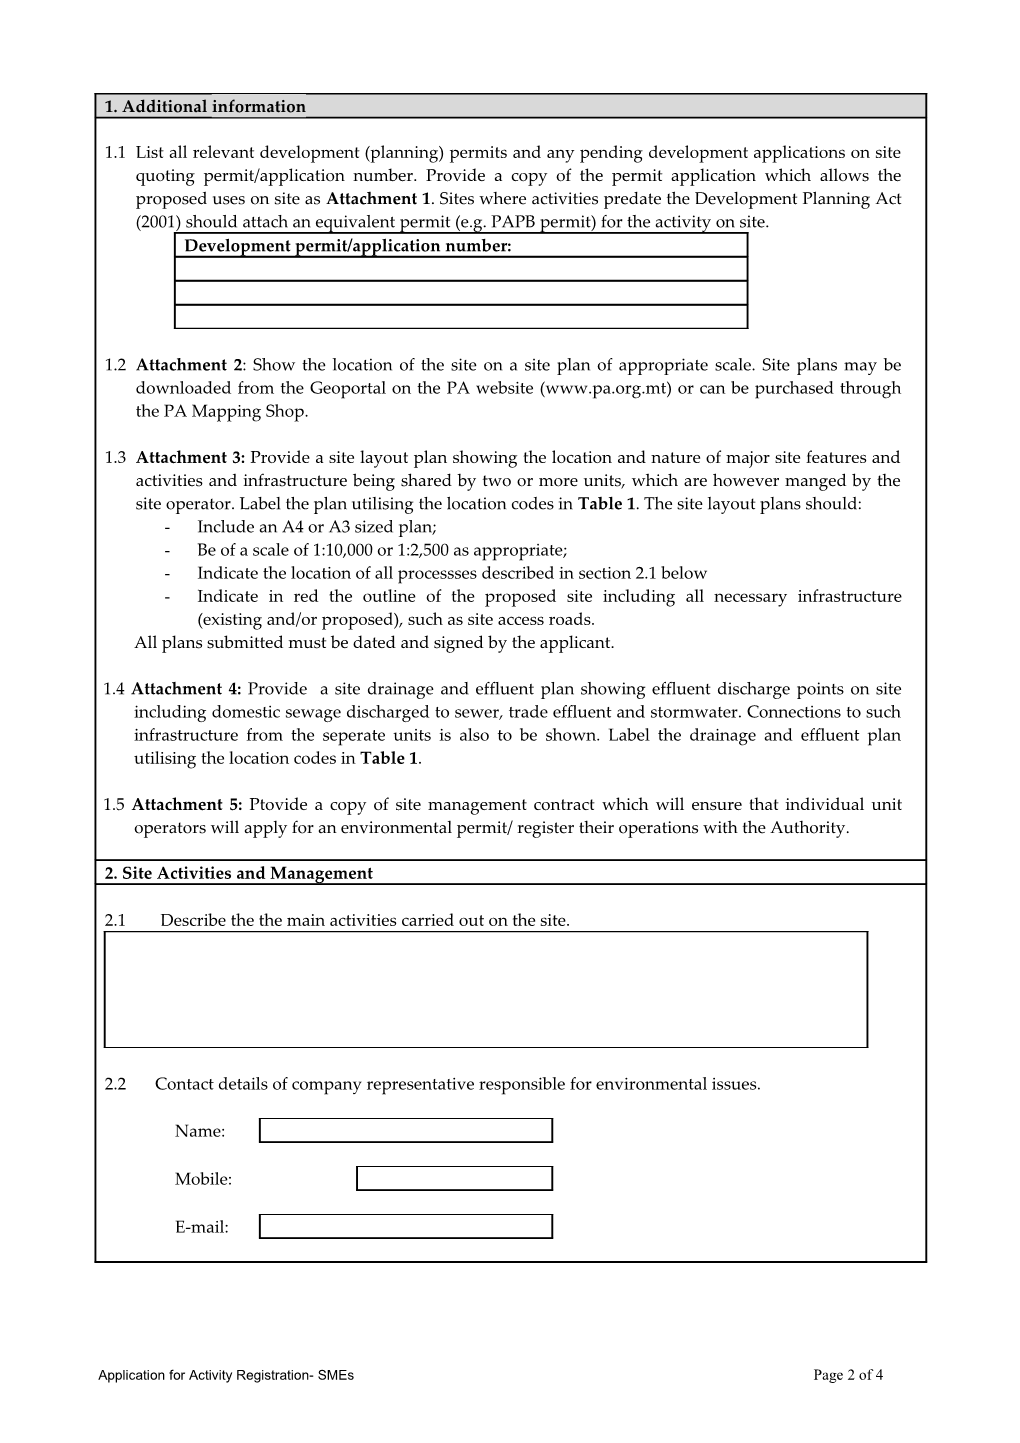 Application for Activity Registration- SME